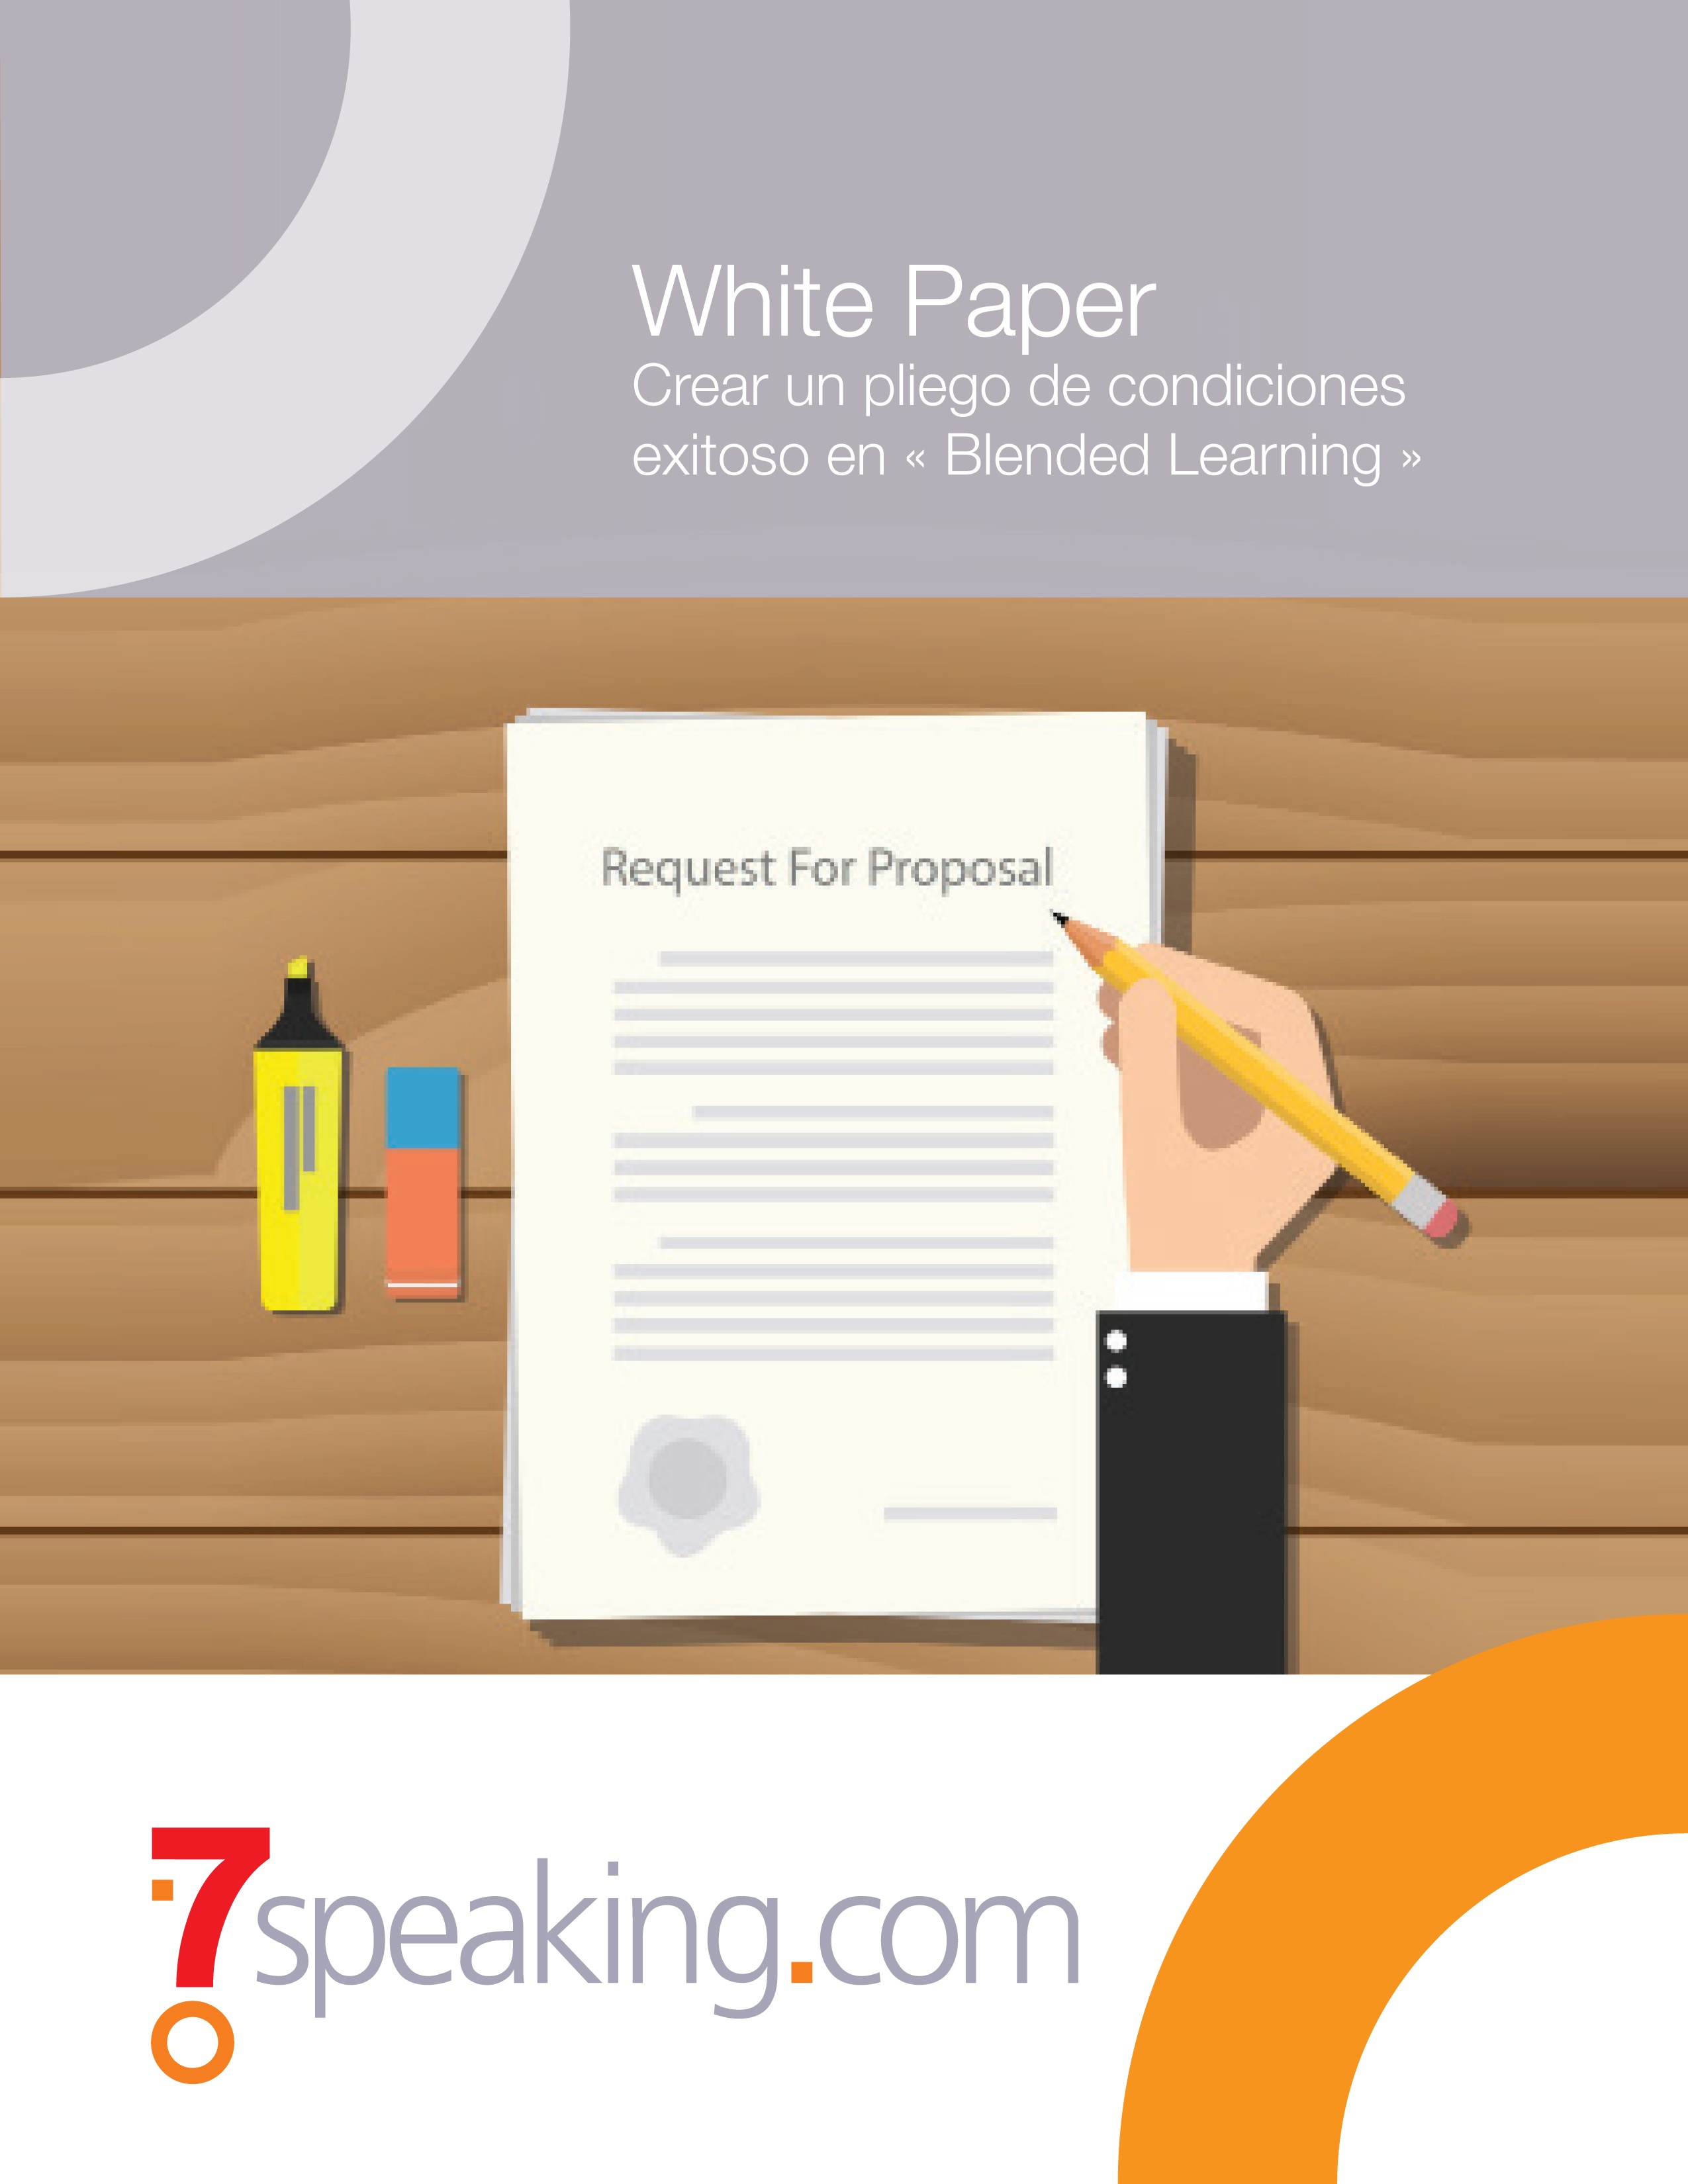 White Paper - Crear un pliego de condiciones exitoso en Blended Learning